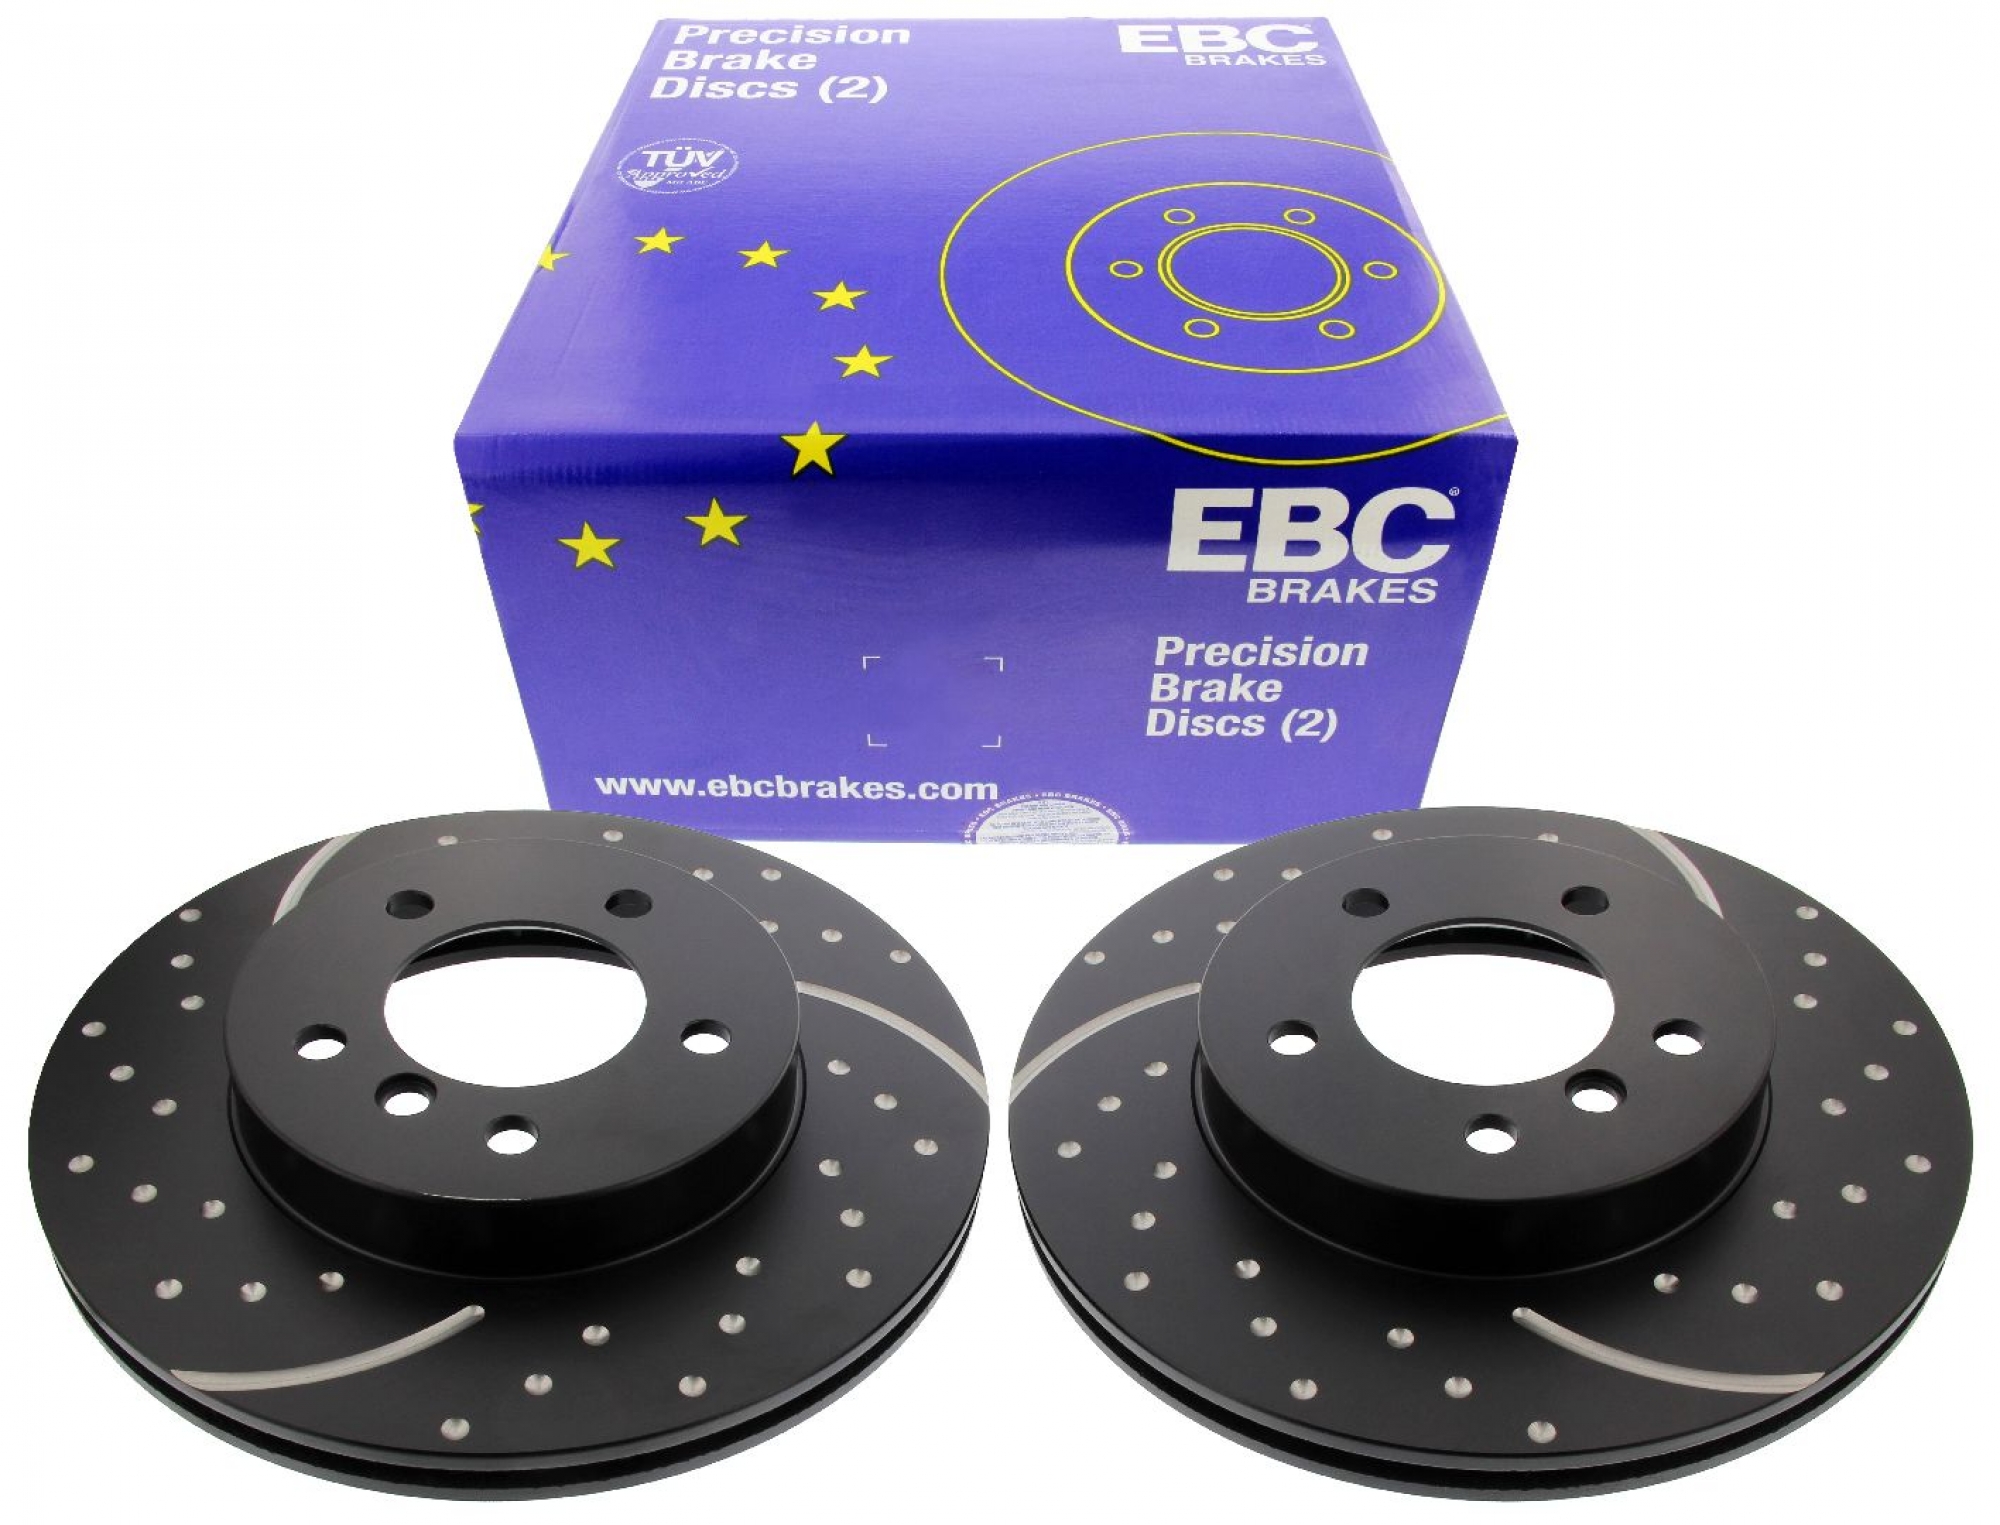 EBC-Bremsscheiben, Turbo Groove Disc Black (2-teilig), VA, BMW Z3, Z4, 3